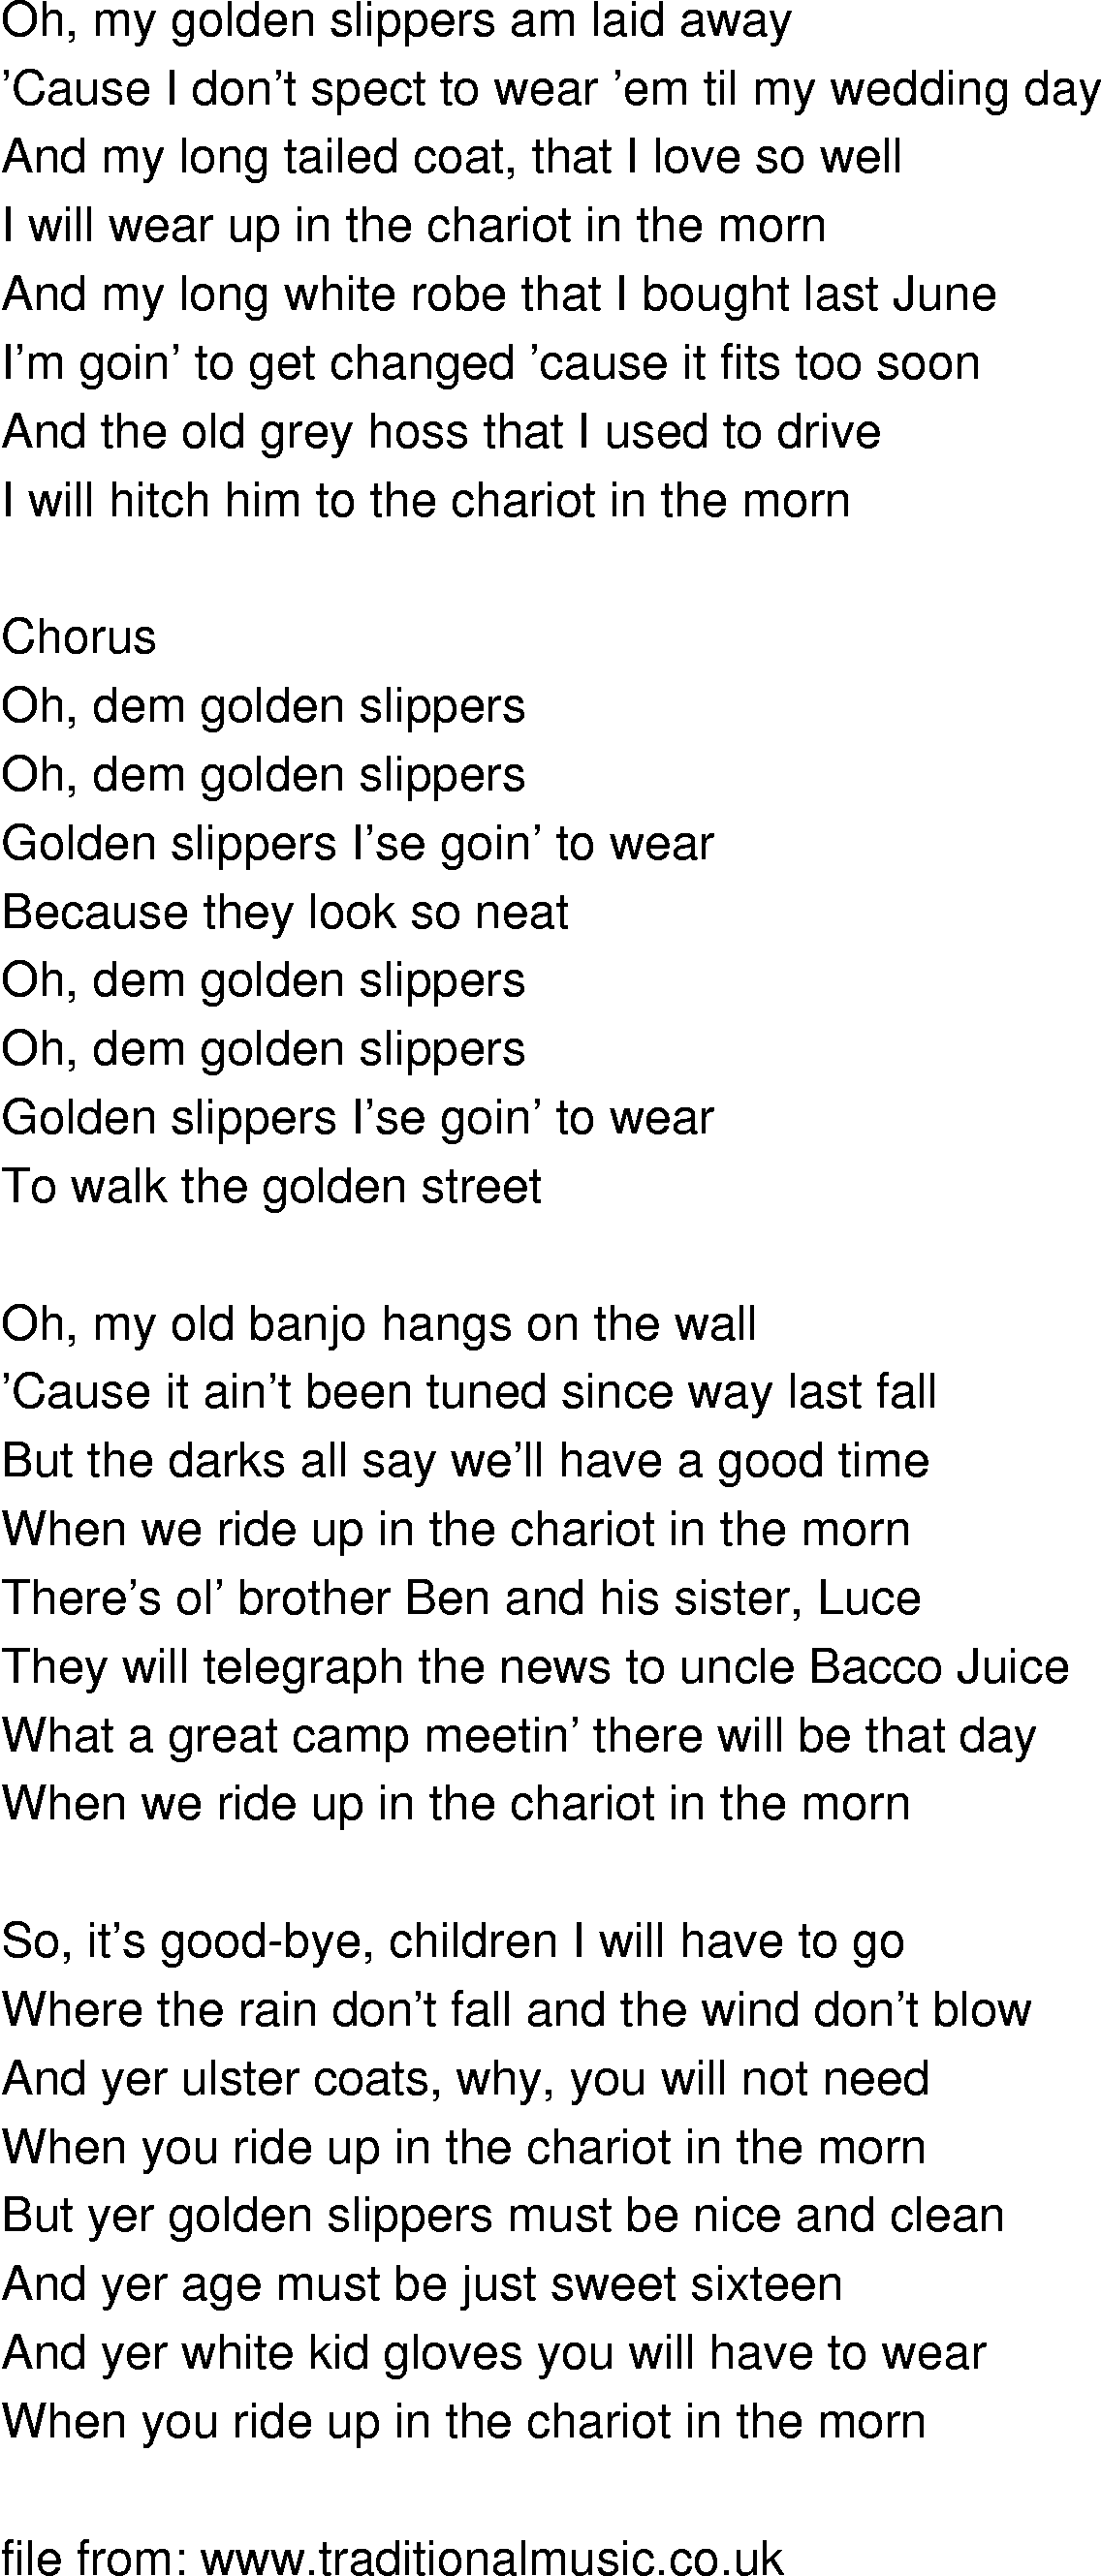 Old-Time (oldtimey) Song Lyrics - oh them golden slippers